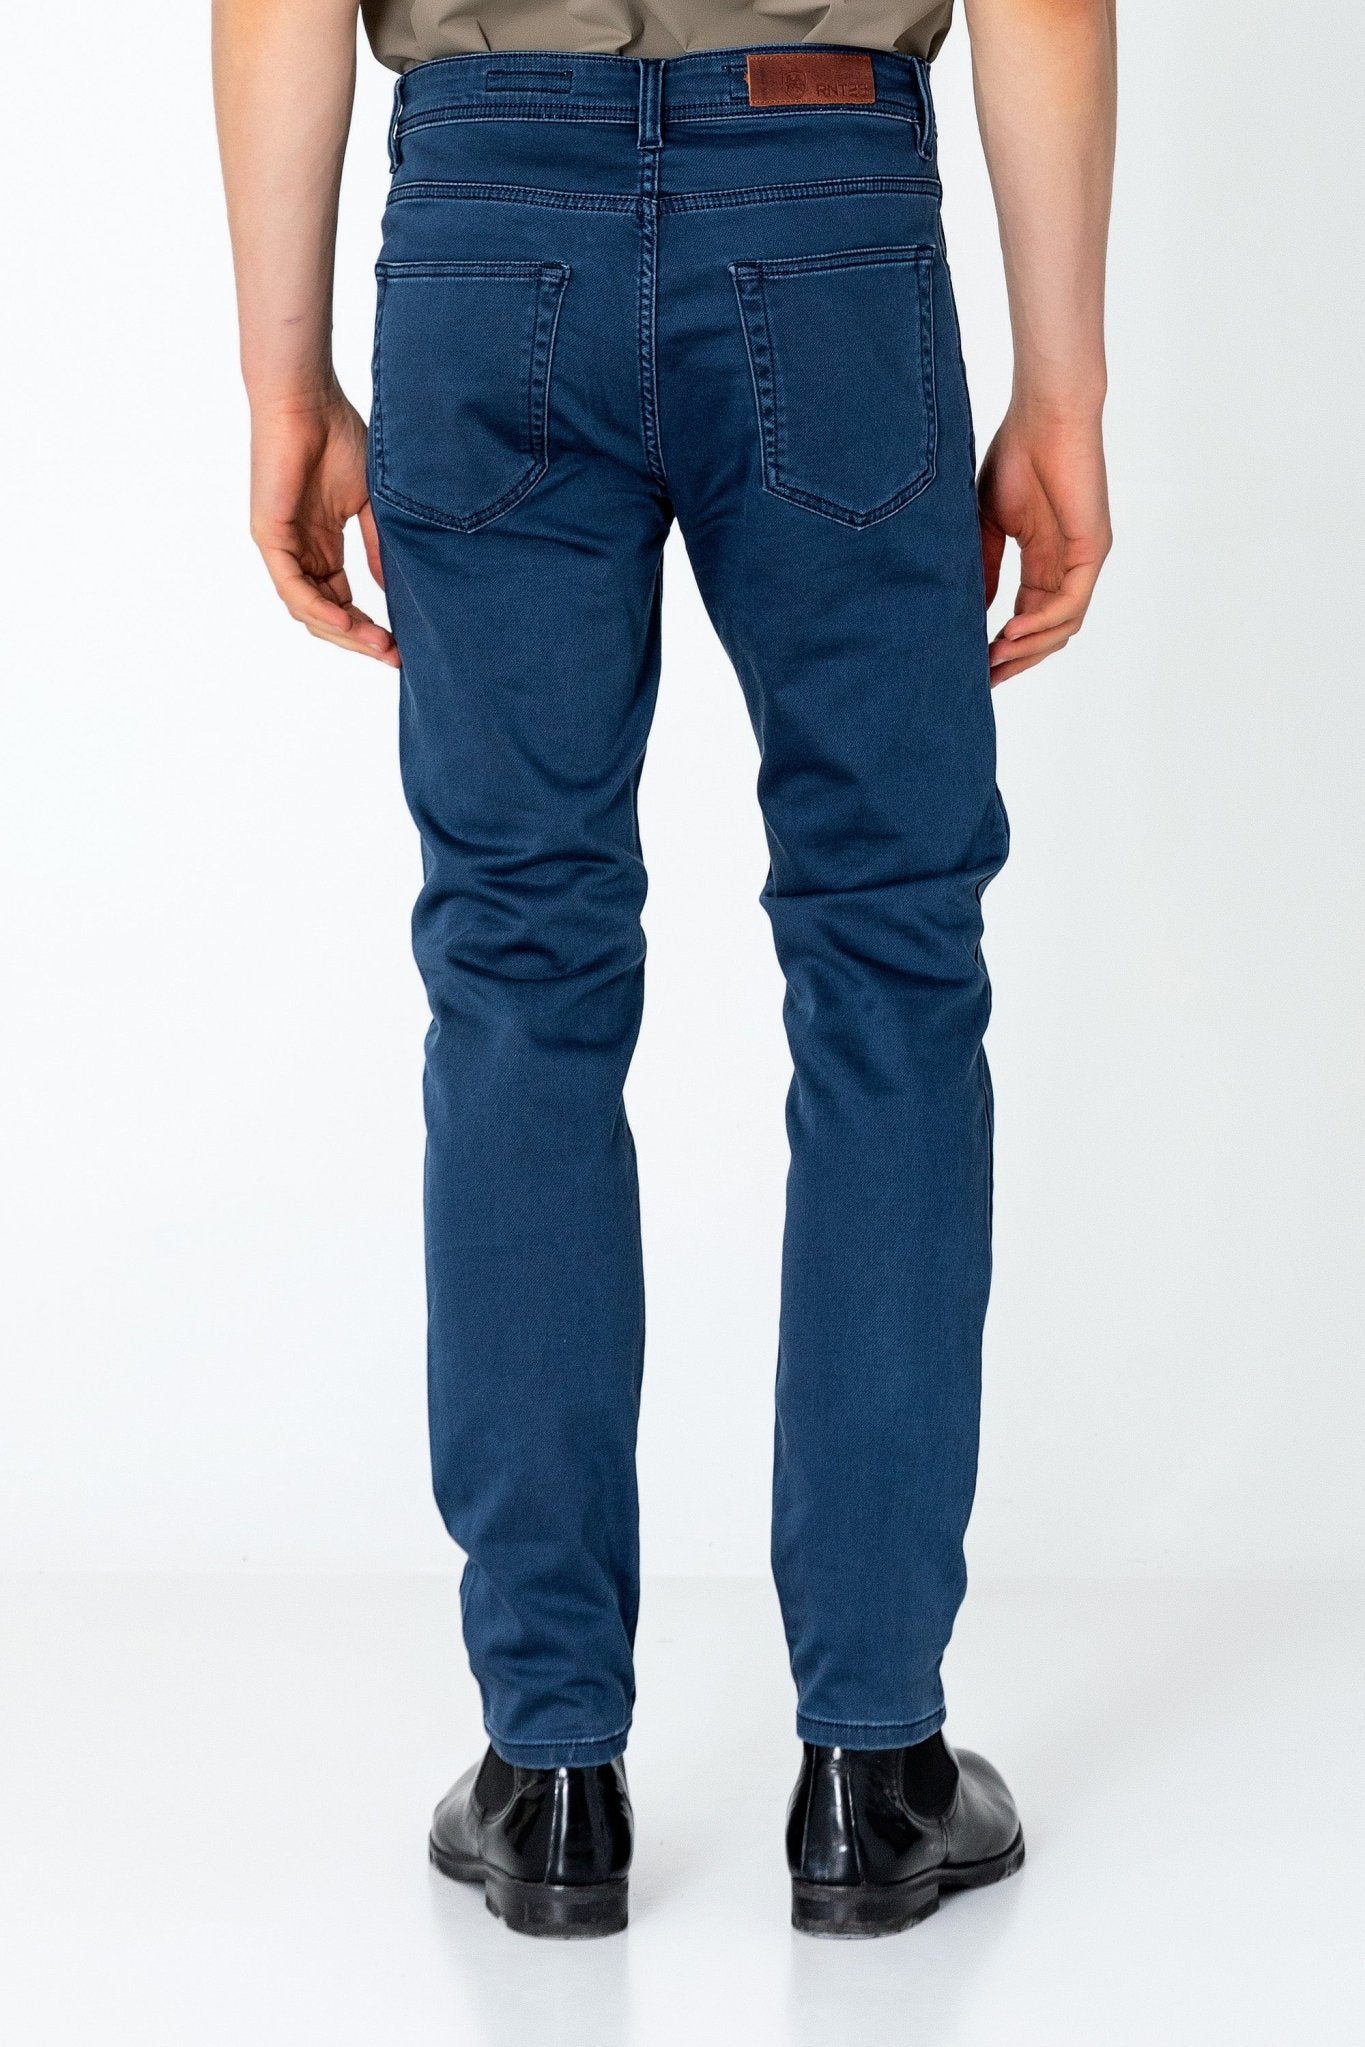 Super Soft 5-pocket Style Pants - Dark Navy - Ron Tomson